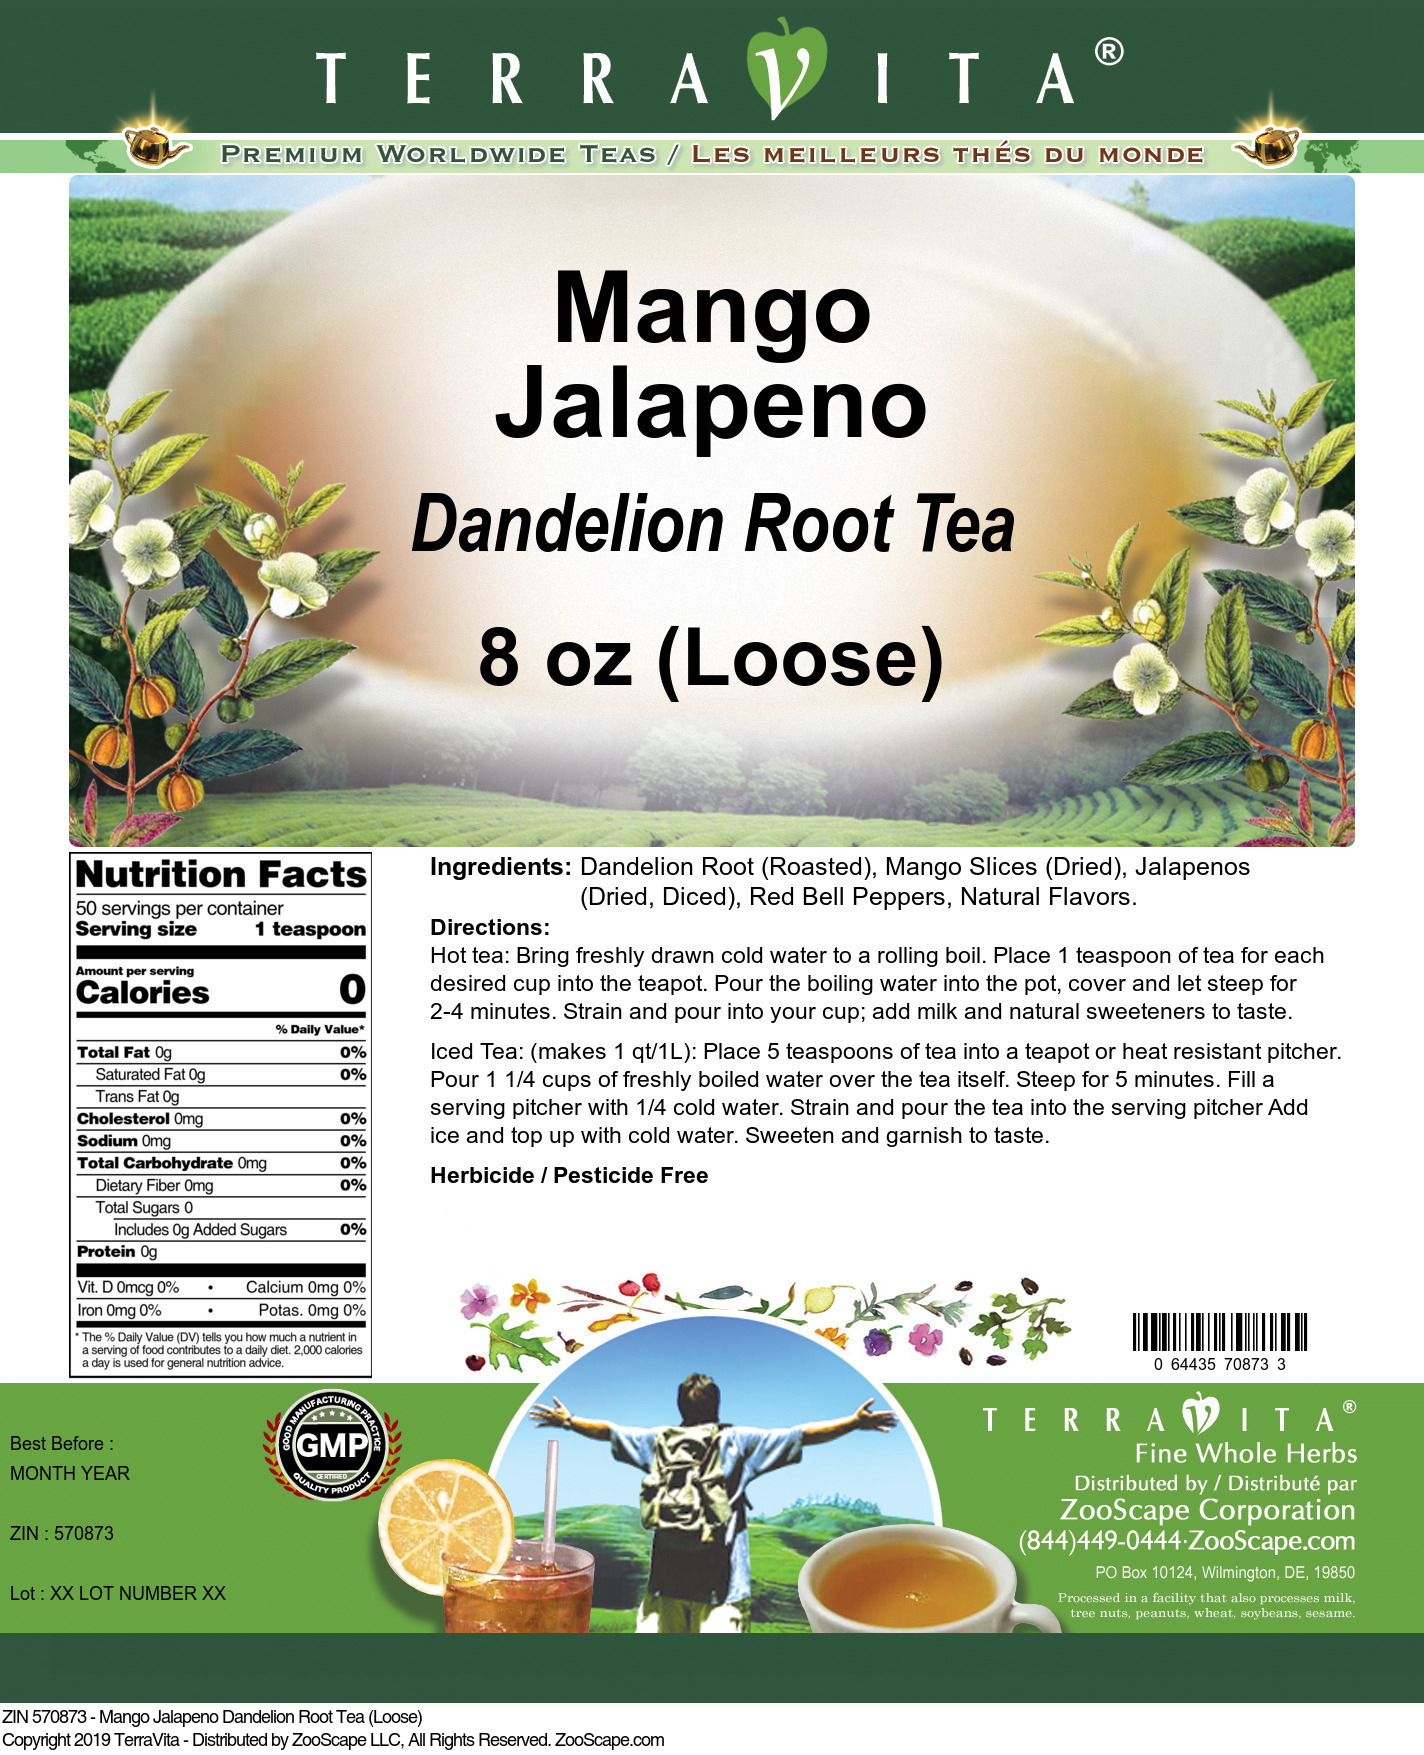 Mango Jalapeno Dandelion Root Tea (Loose) - Label